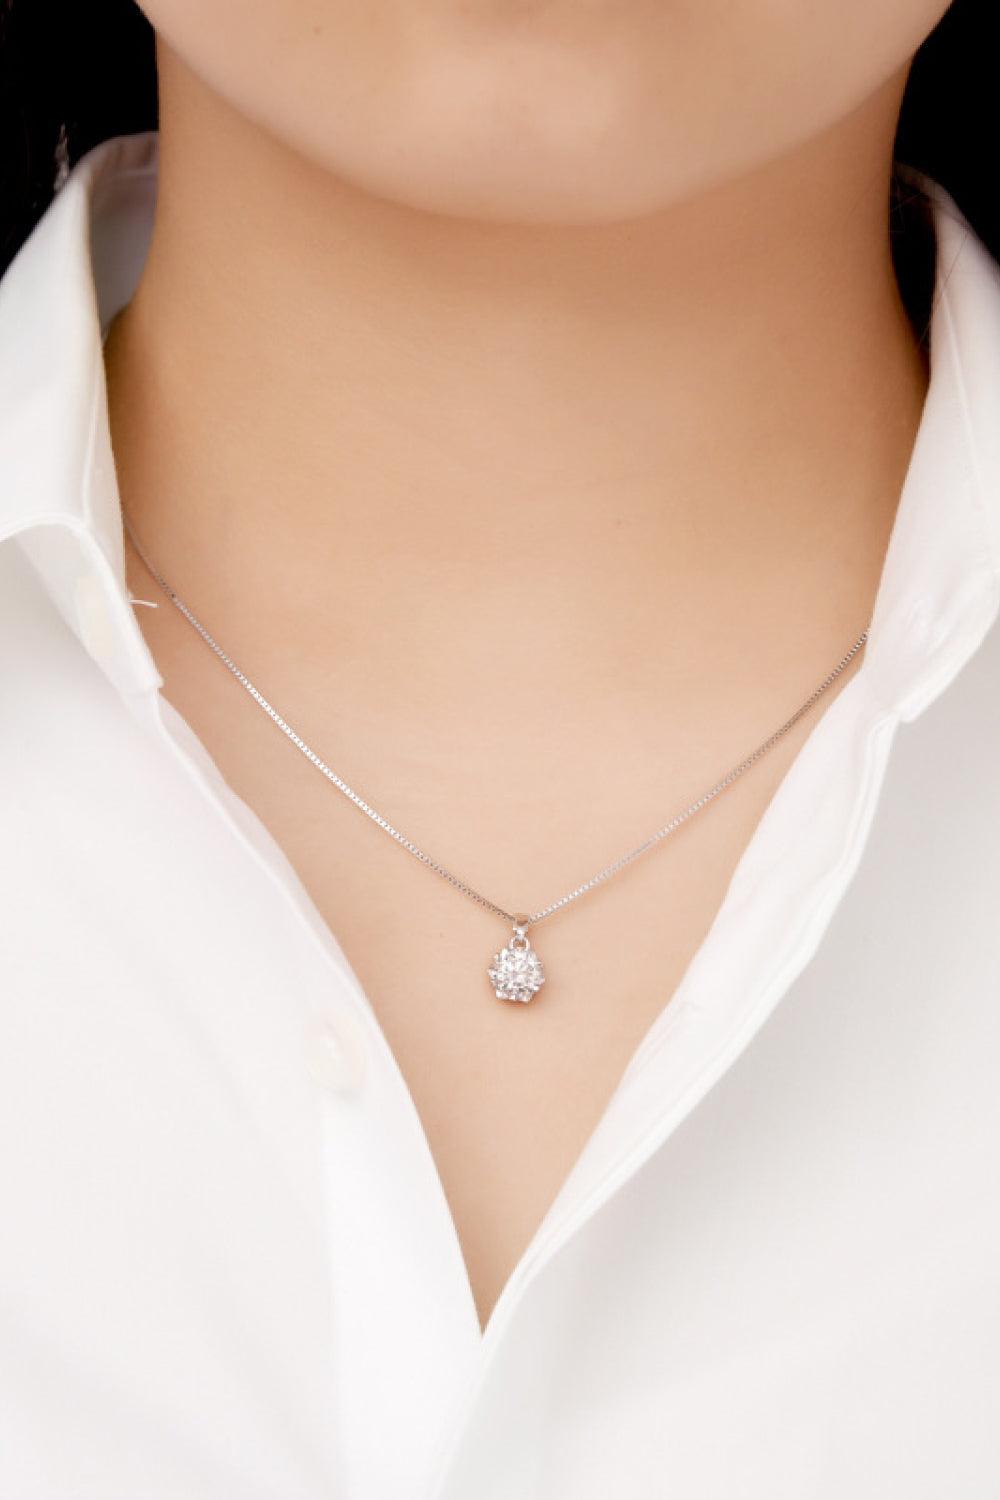 1carat Diamond Platinum necklaceMainstone=